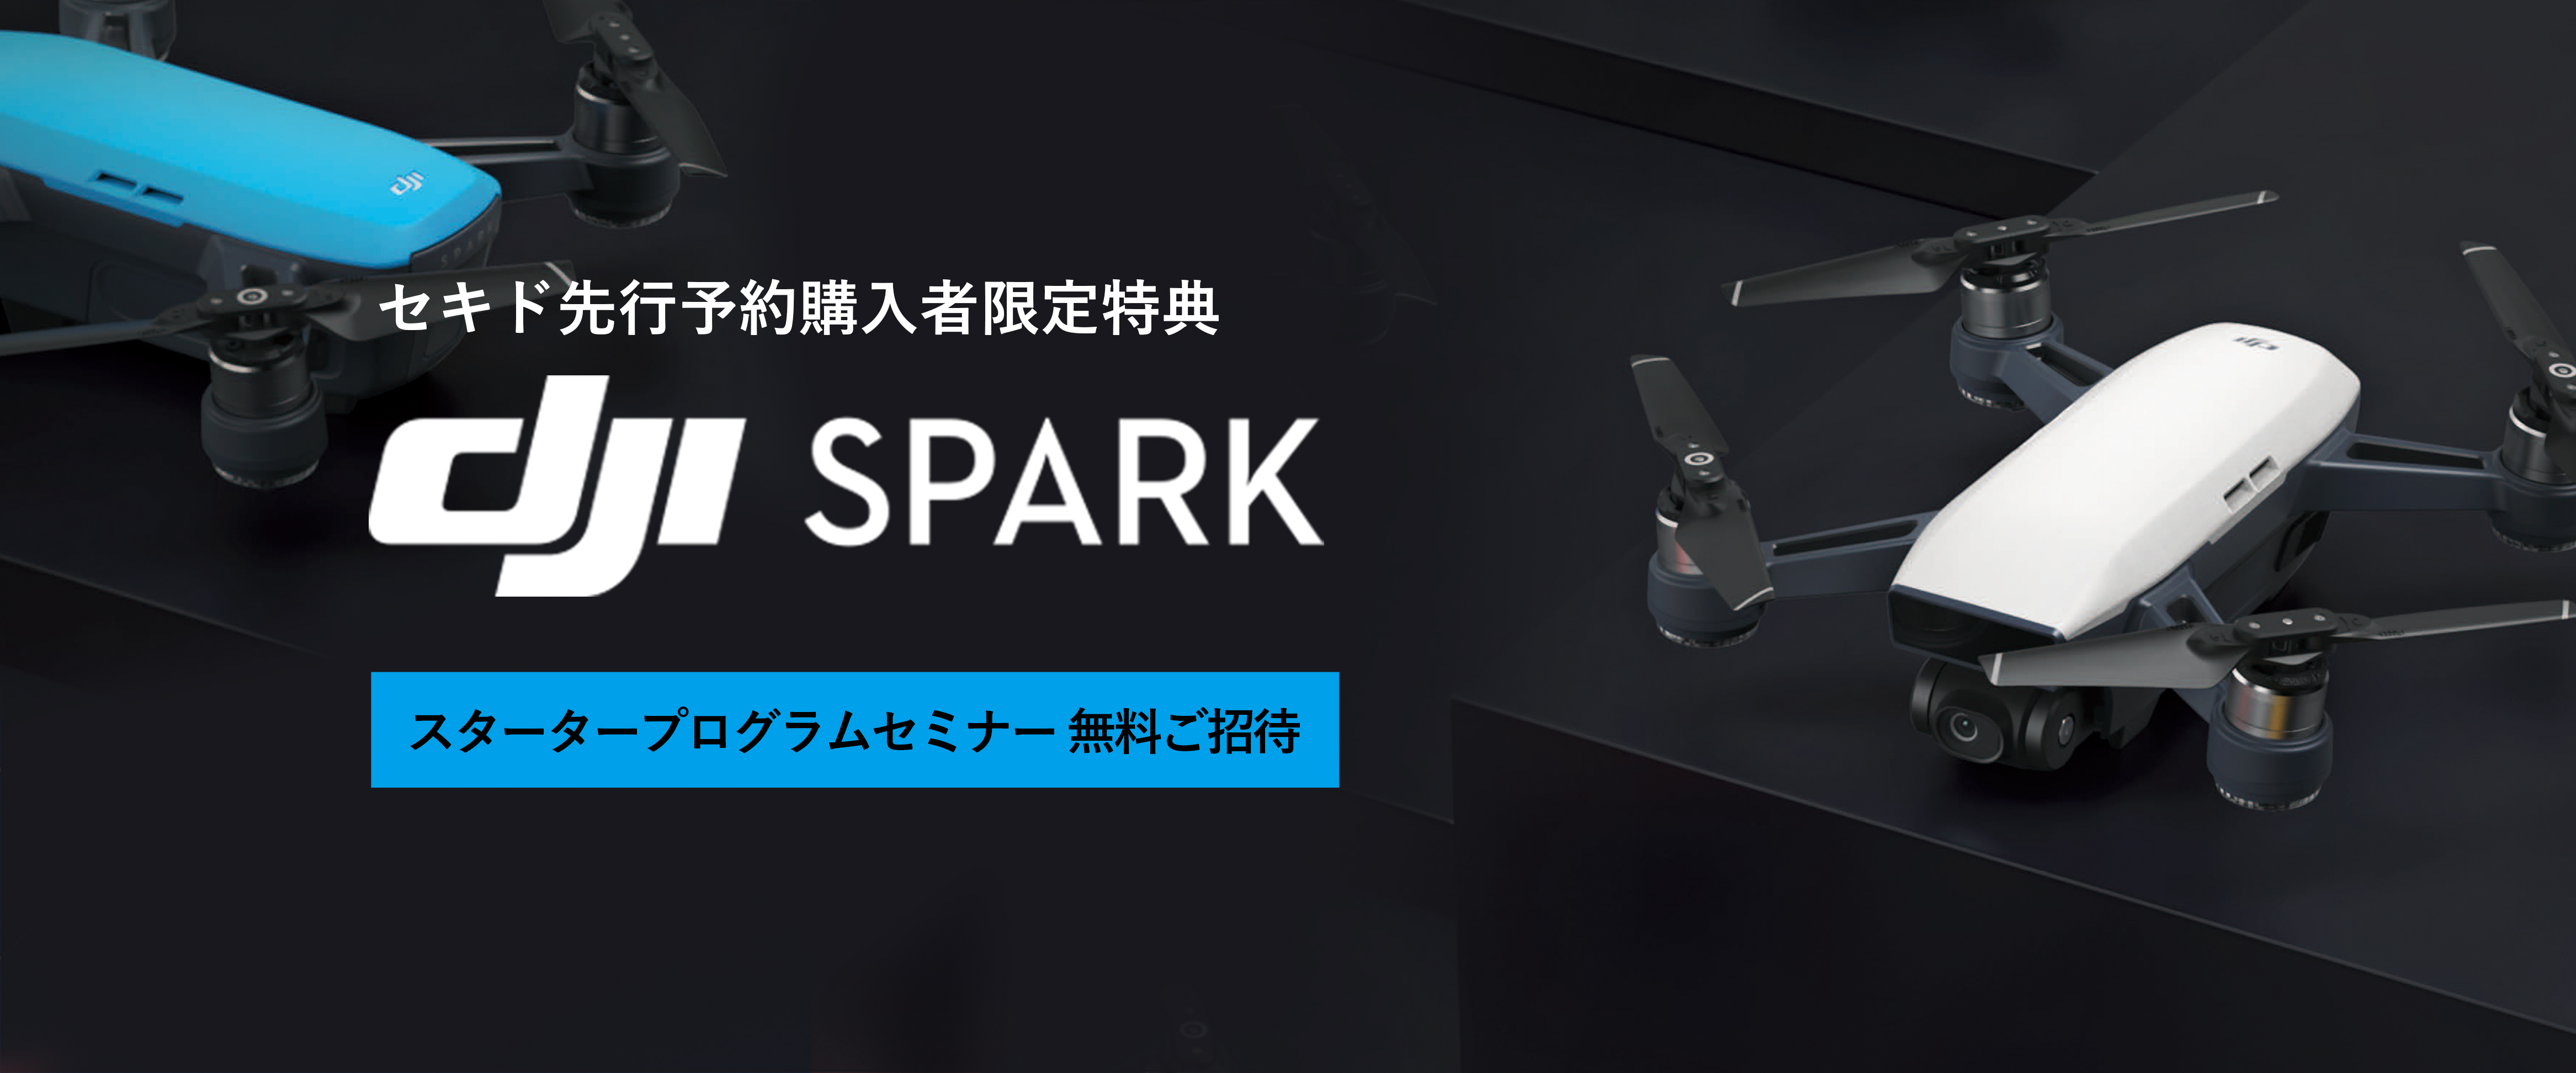 DJI SPARK スタータープログラムセミナー in 東京